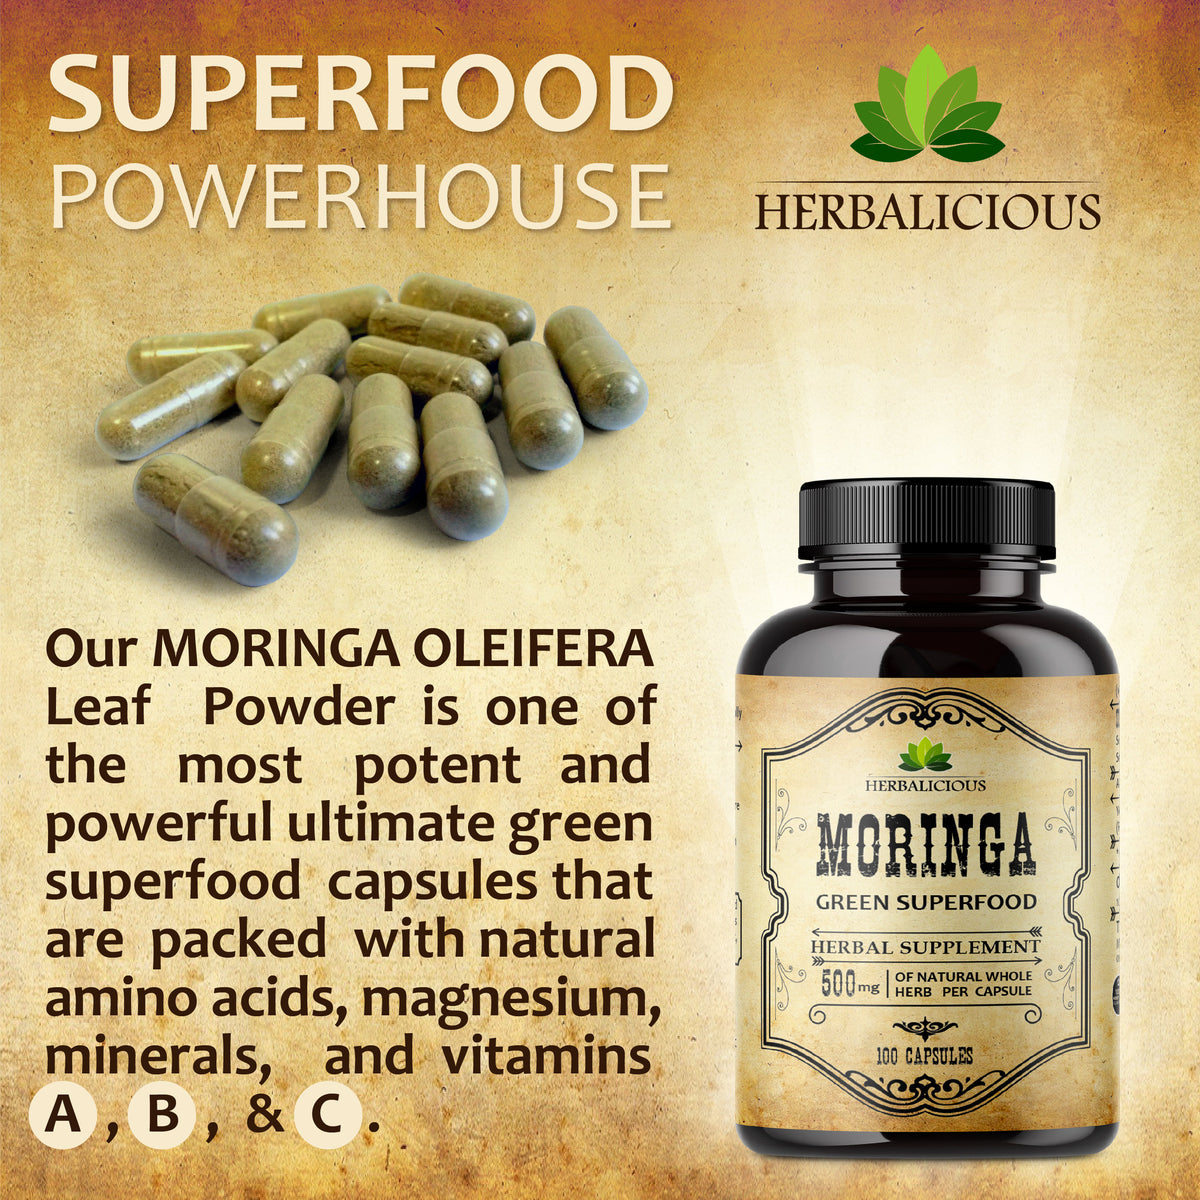 Moringa 100 Capsules - Amino Acid & Antioxidant-Rich Moringa Leaves Extract Superfood for Skin, Hair, Brain, Wellness -  Made in USA